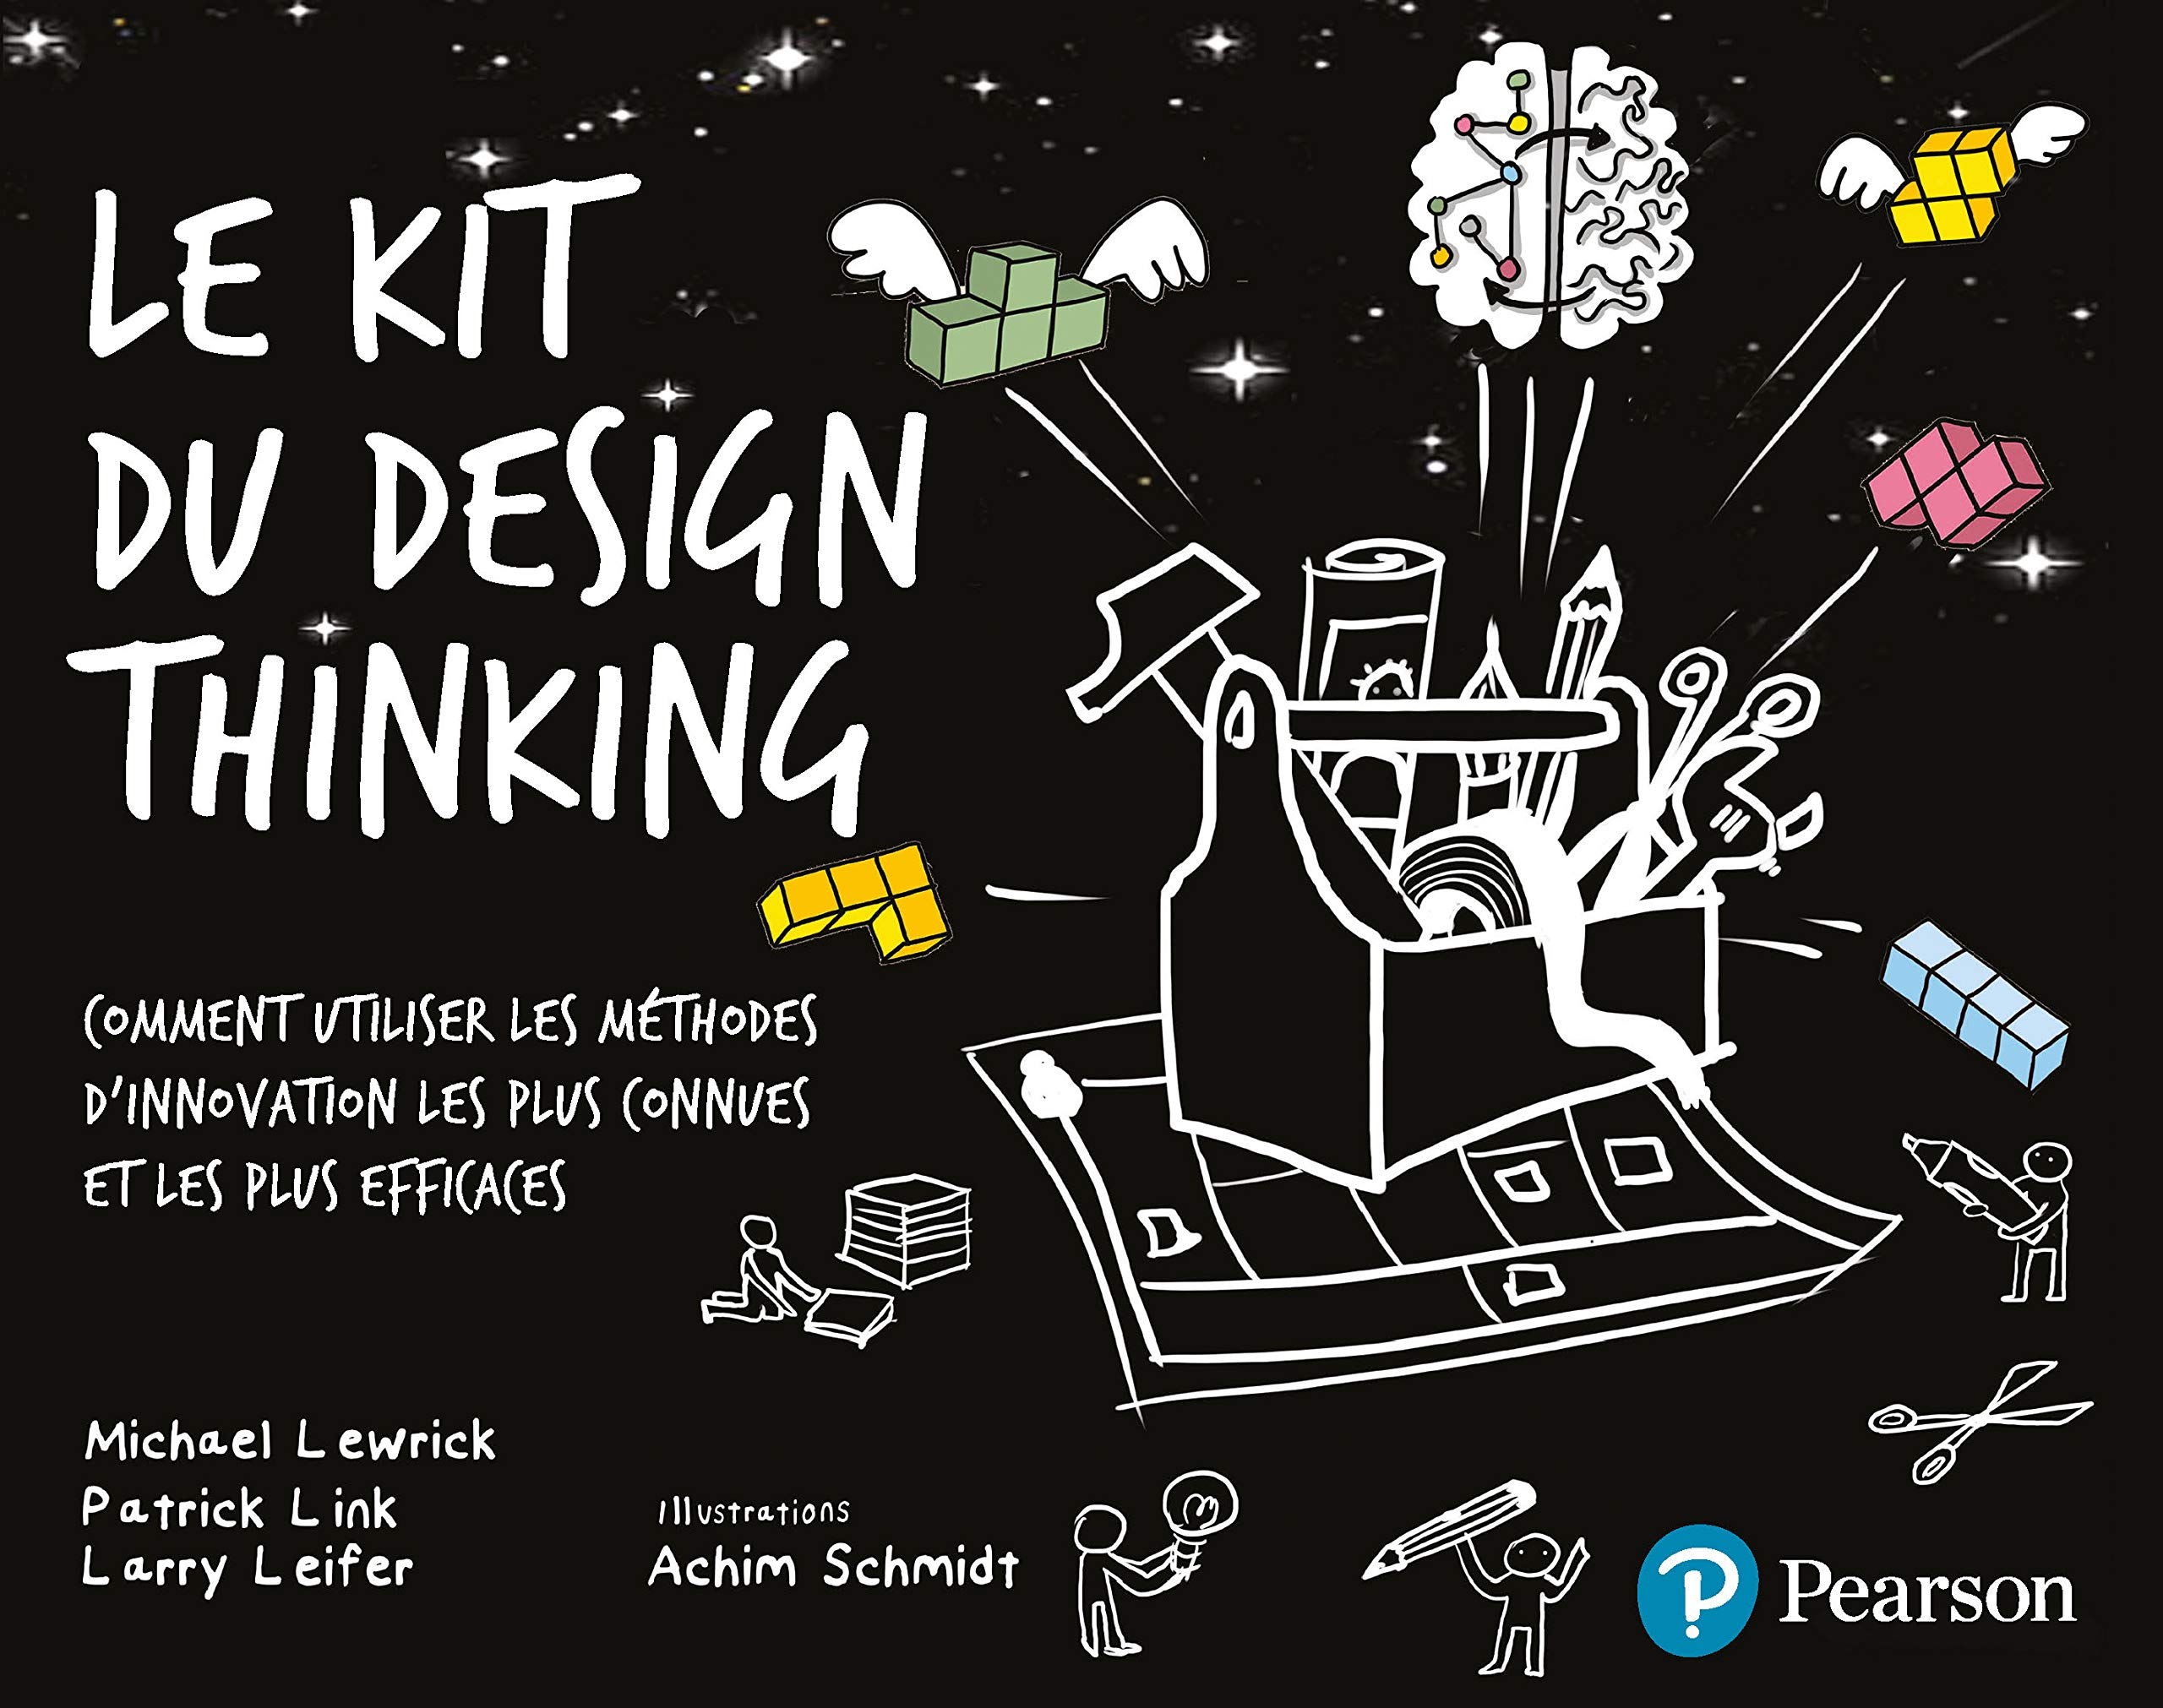 Le Kit du design thinking